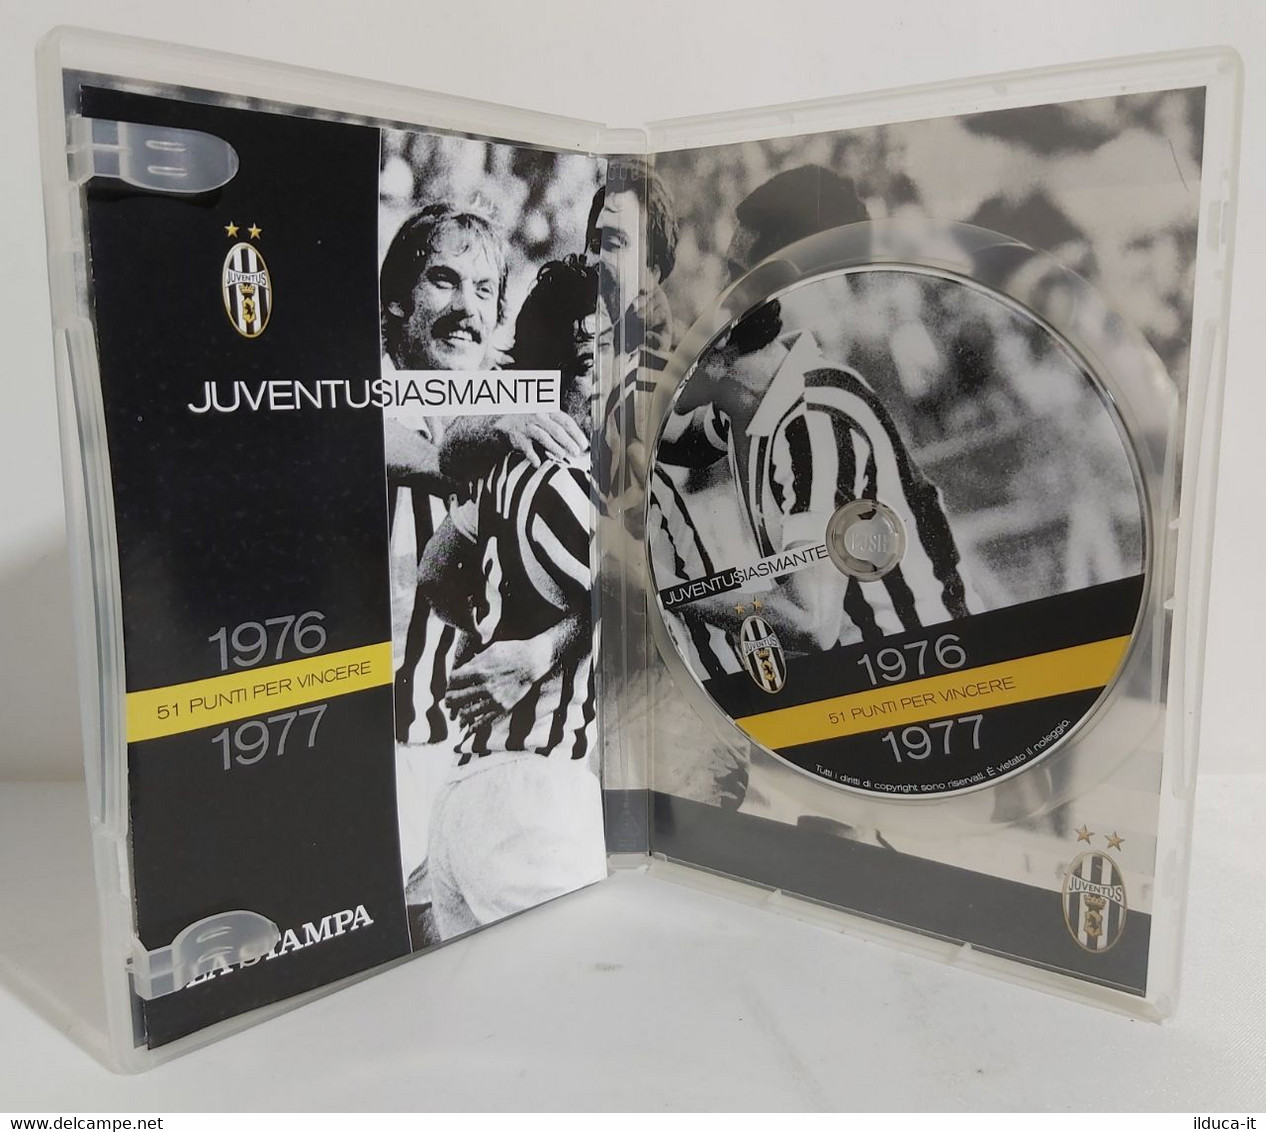 I101801 DVD Juventus - Juventusiasmante 1976-1977 - 51 Punti Per Vincere - Sport